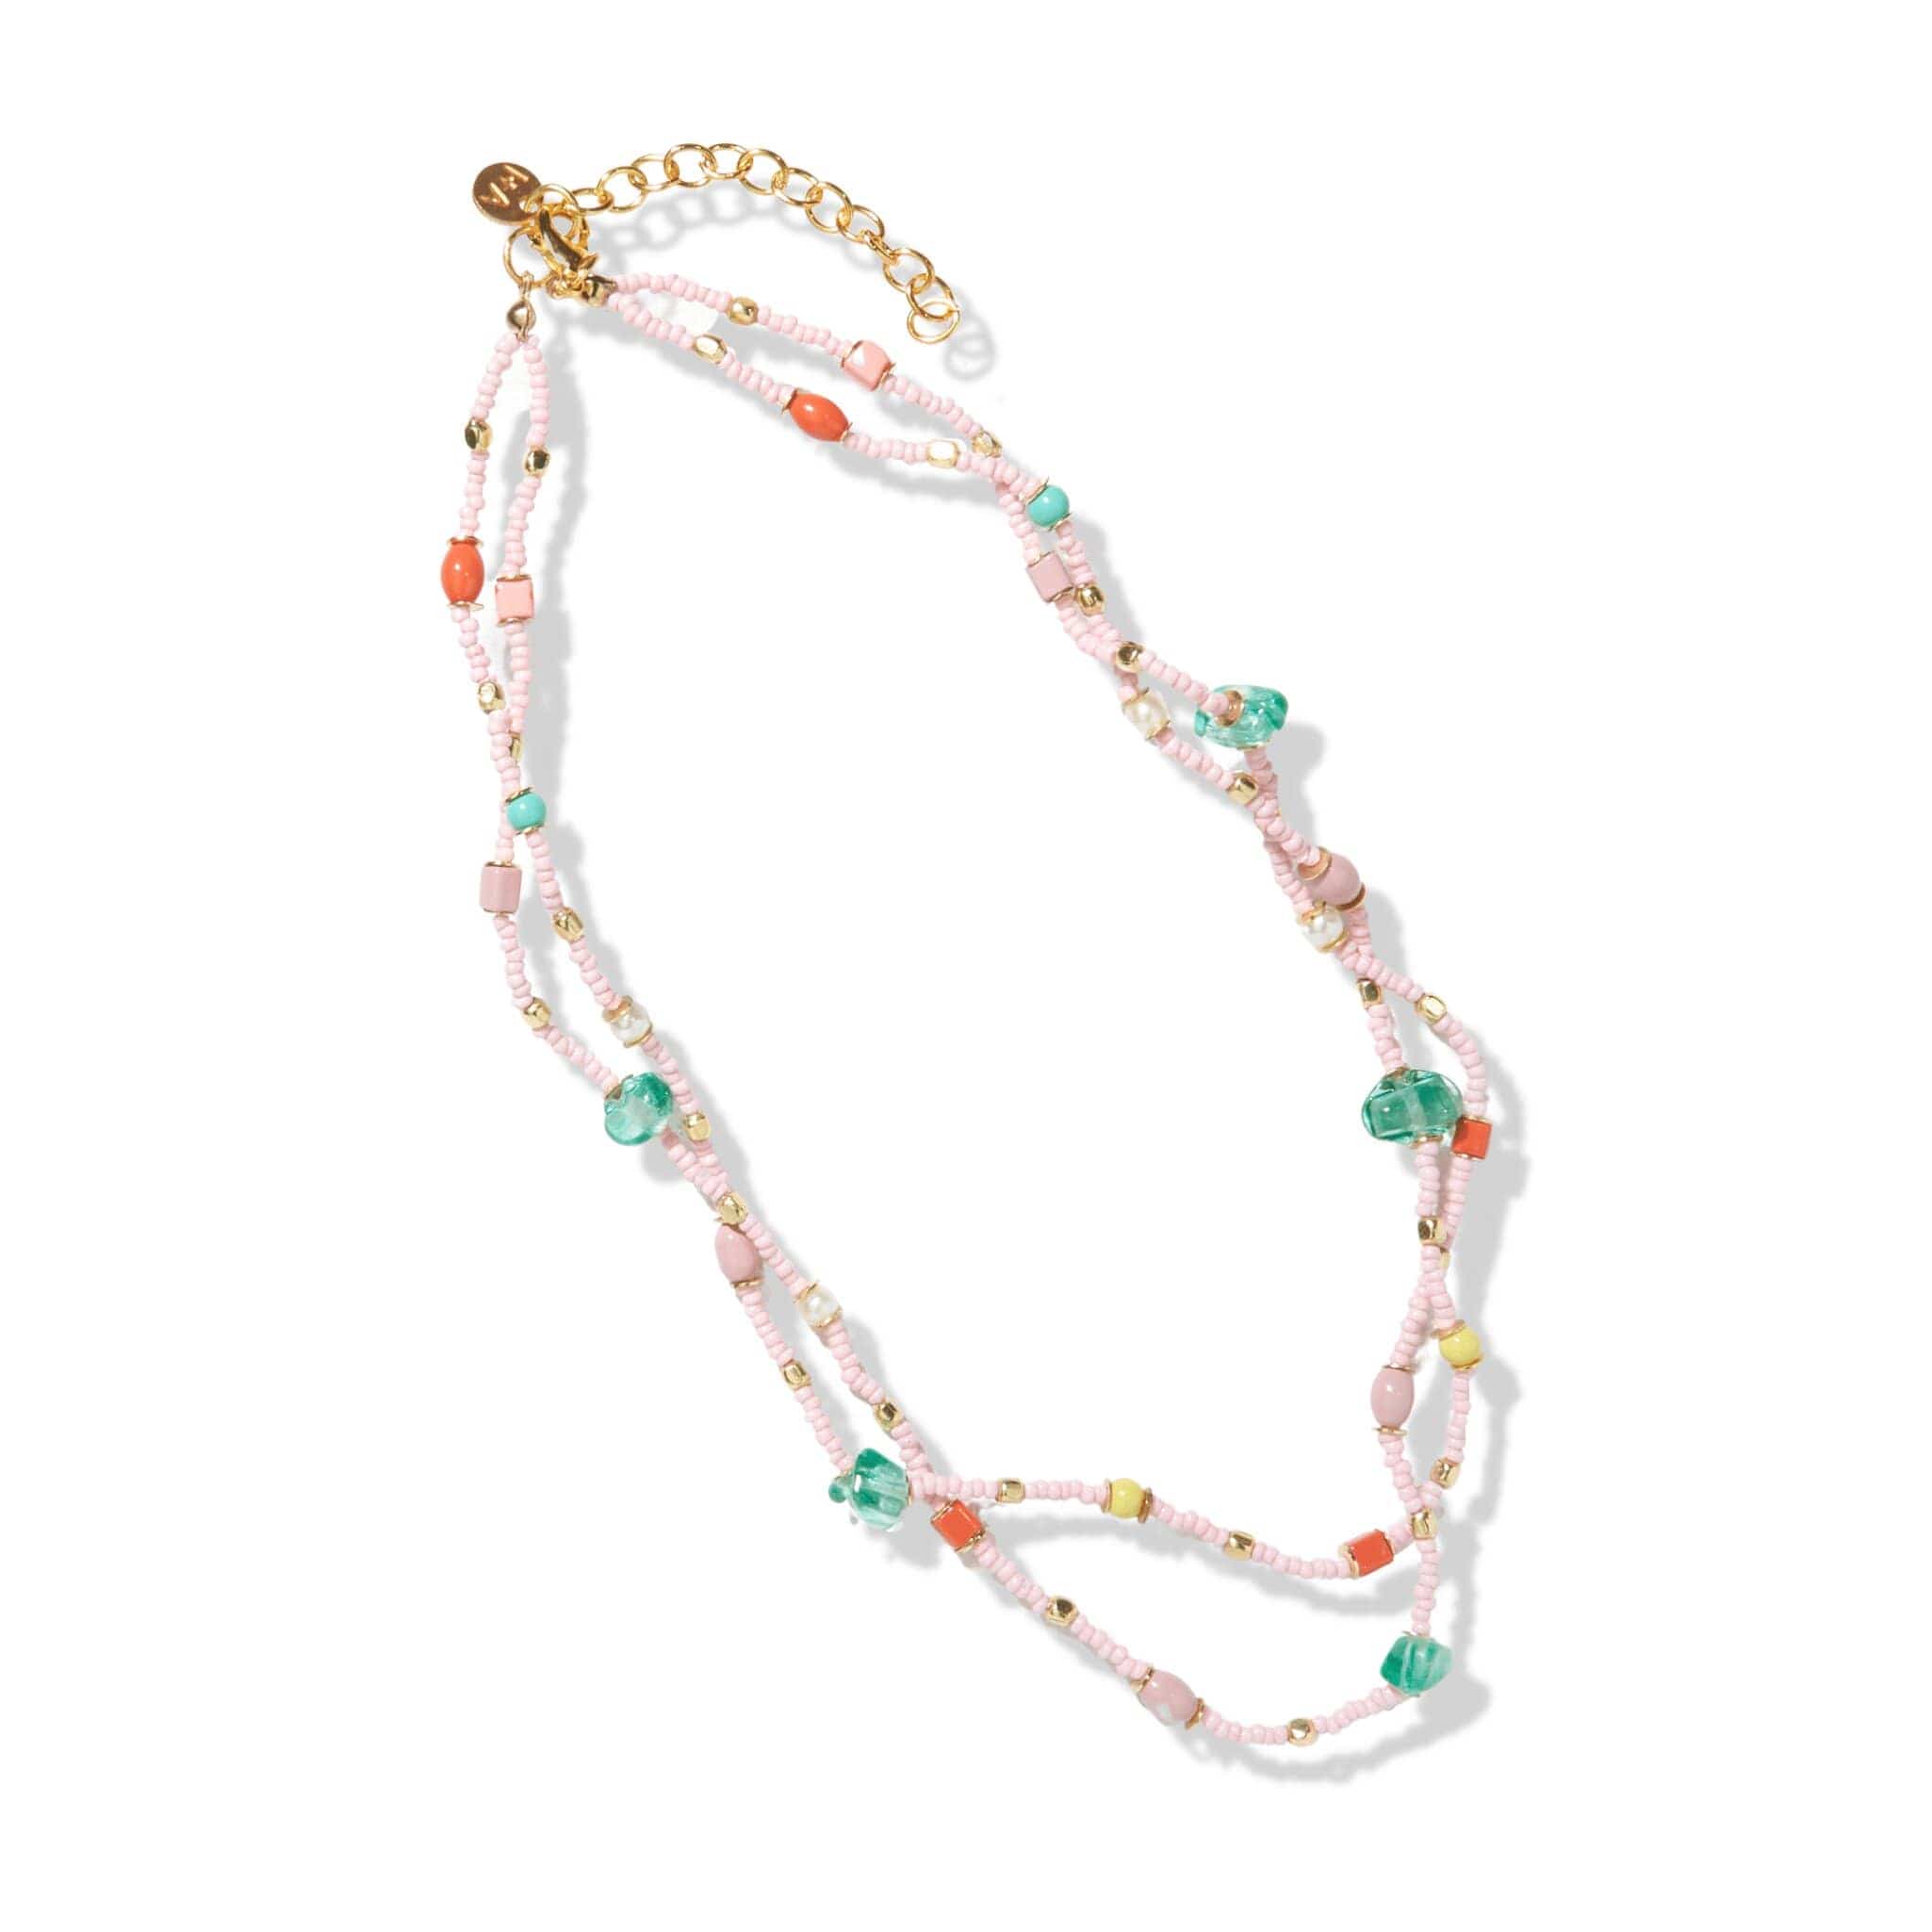 Mixed Unique Beads Necklace